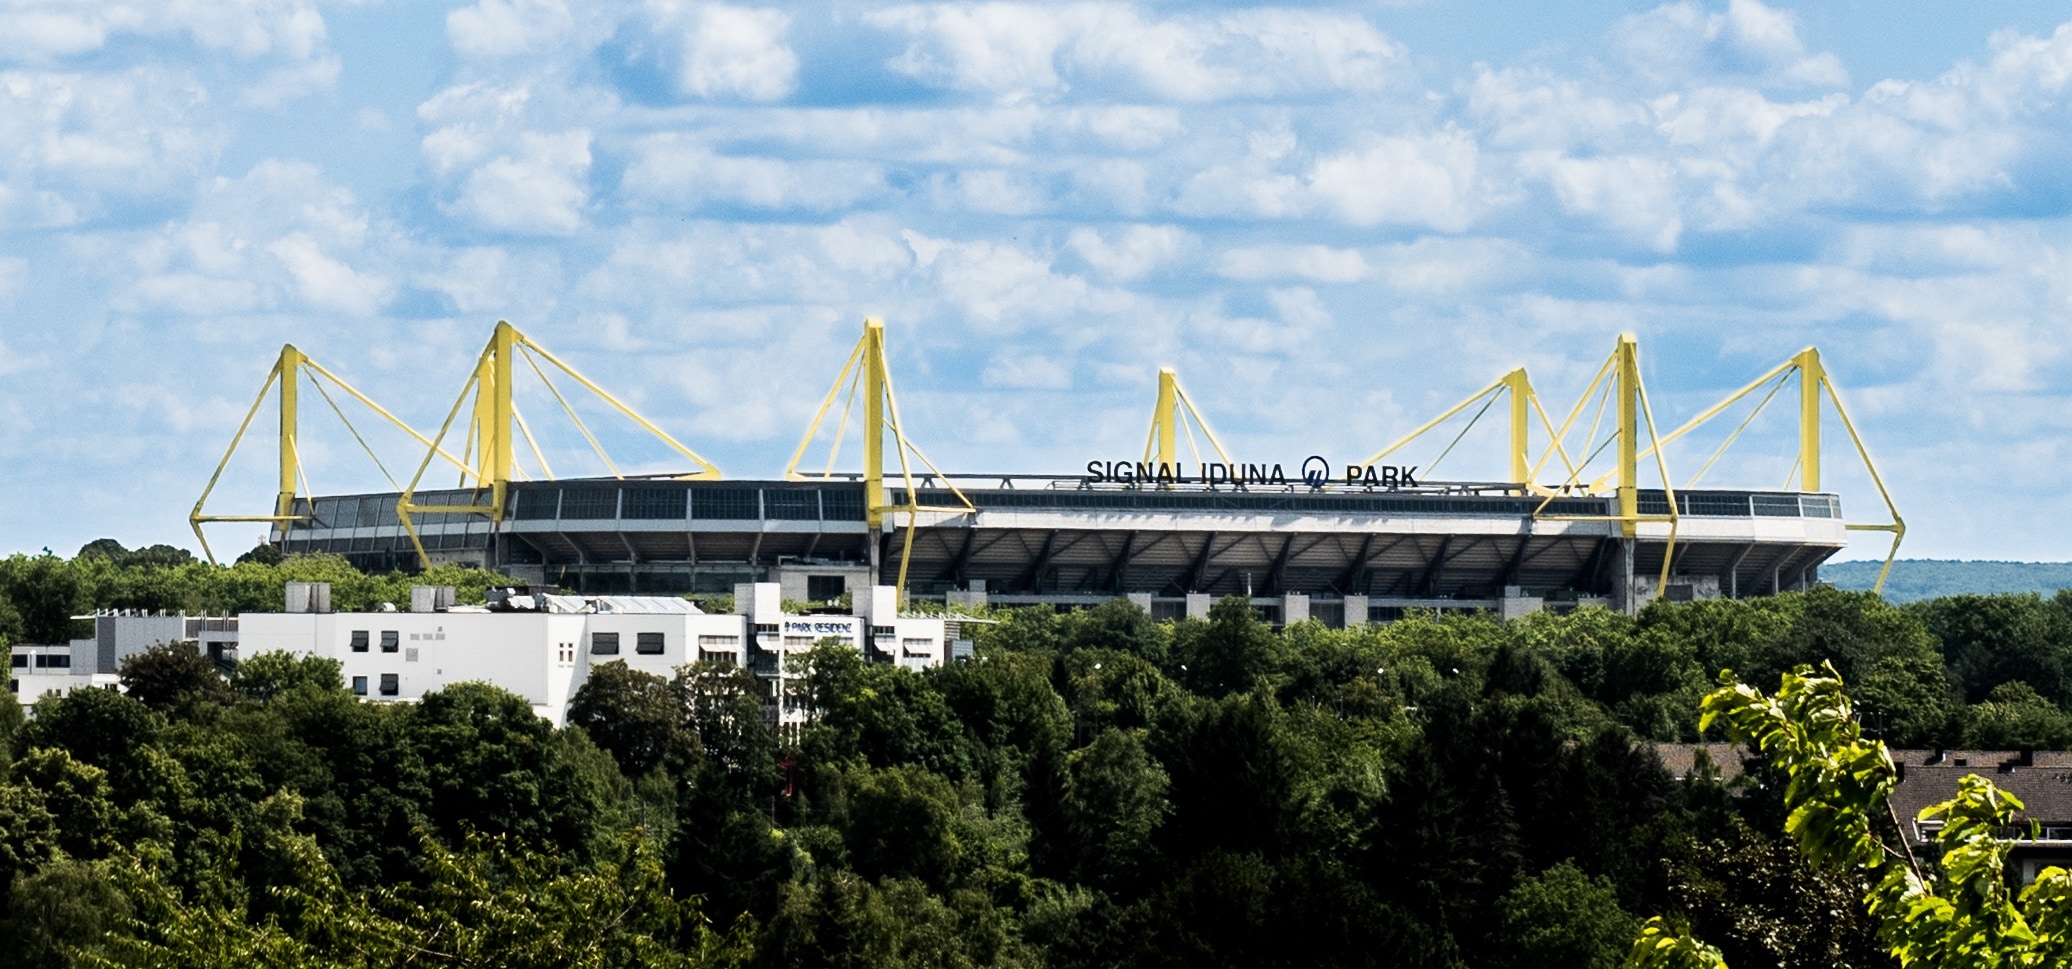 Stadium, Football, Dortmund, bridge - man made structure, connection